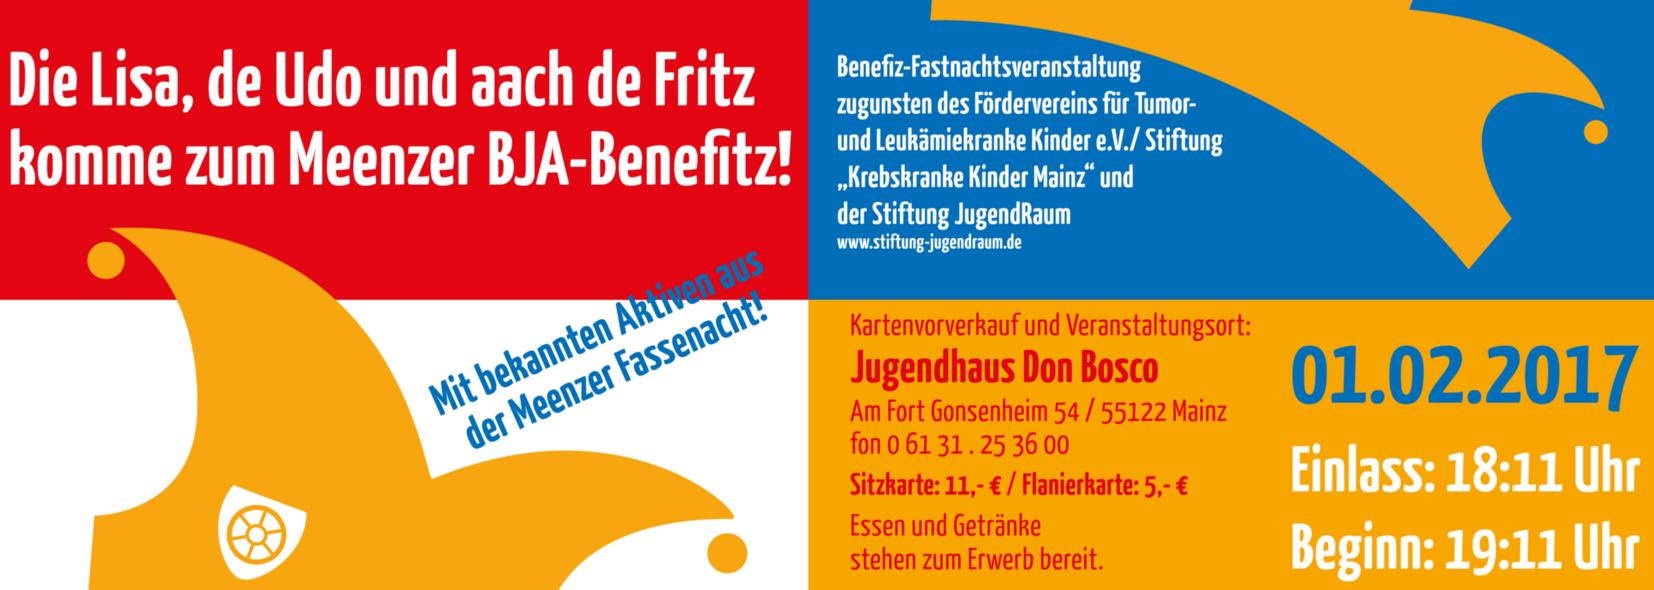 BDKJ/BJA-Benefiz-Fastnacht 2017 (c) BDKJ/BJA Mainz